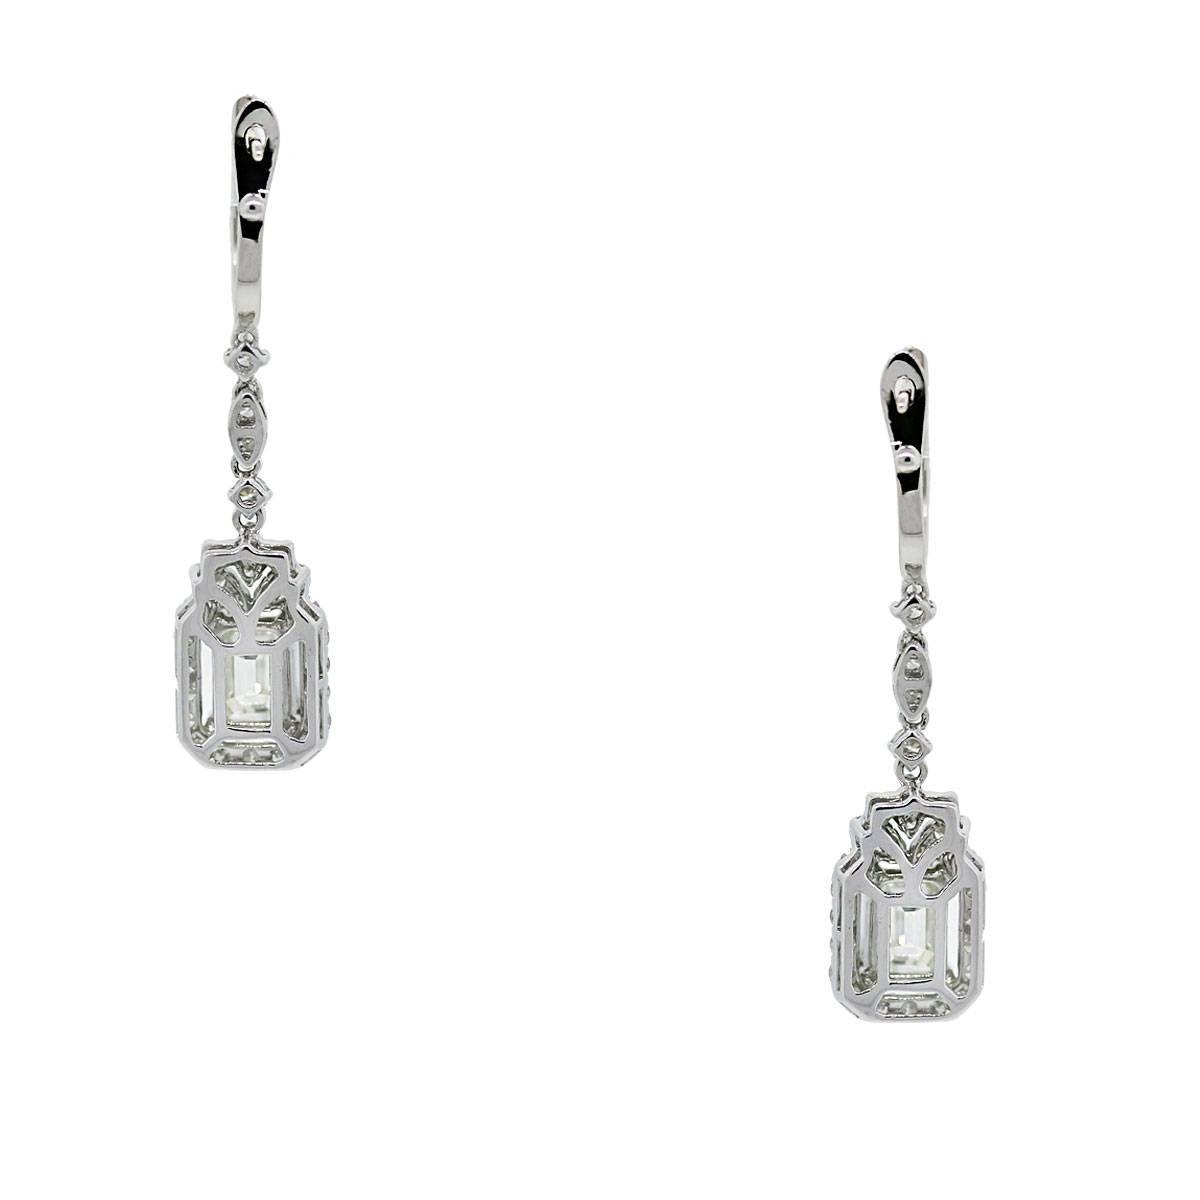 Emerald Cut Diamond Dangle Earrings For Sale at 1stdibs